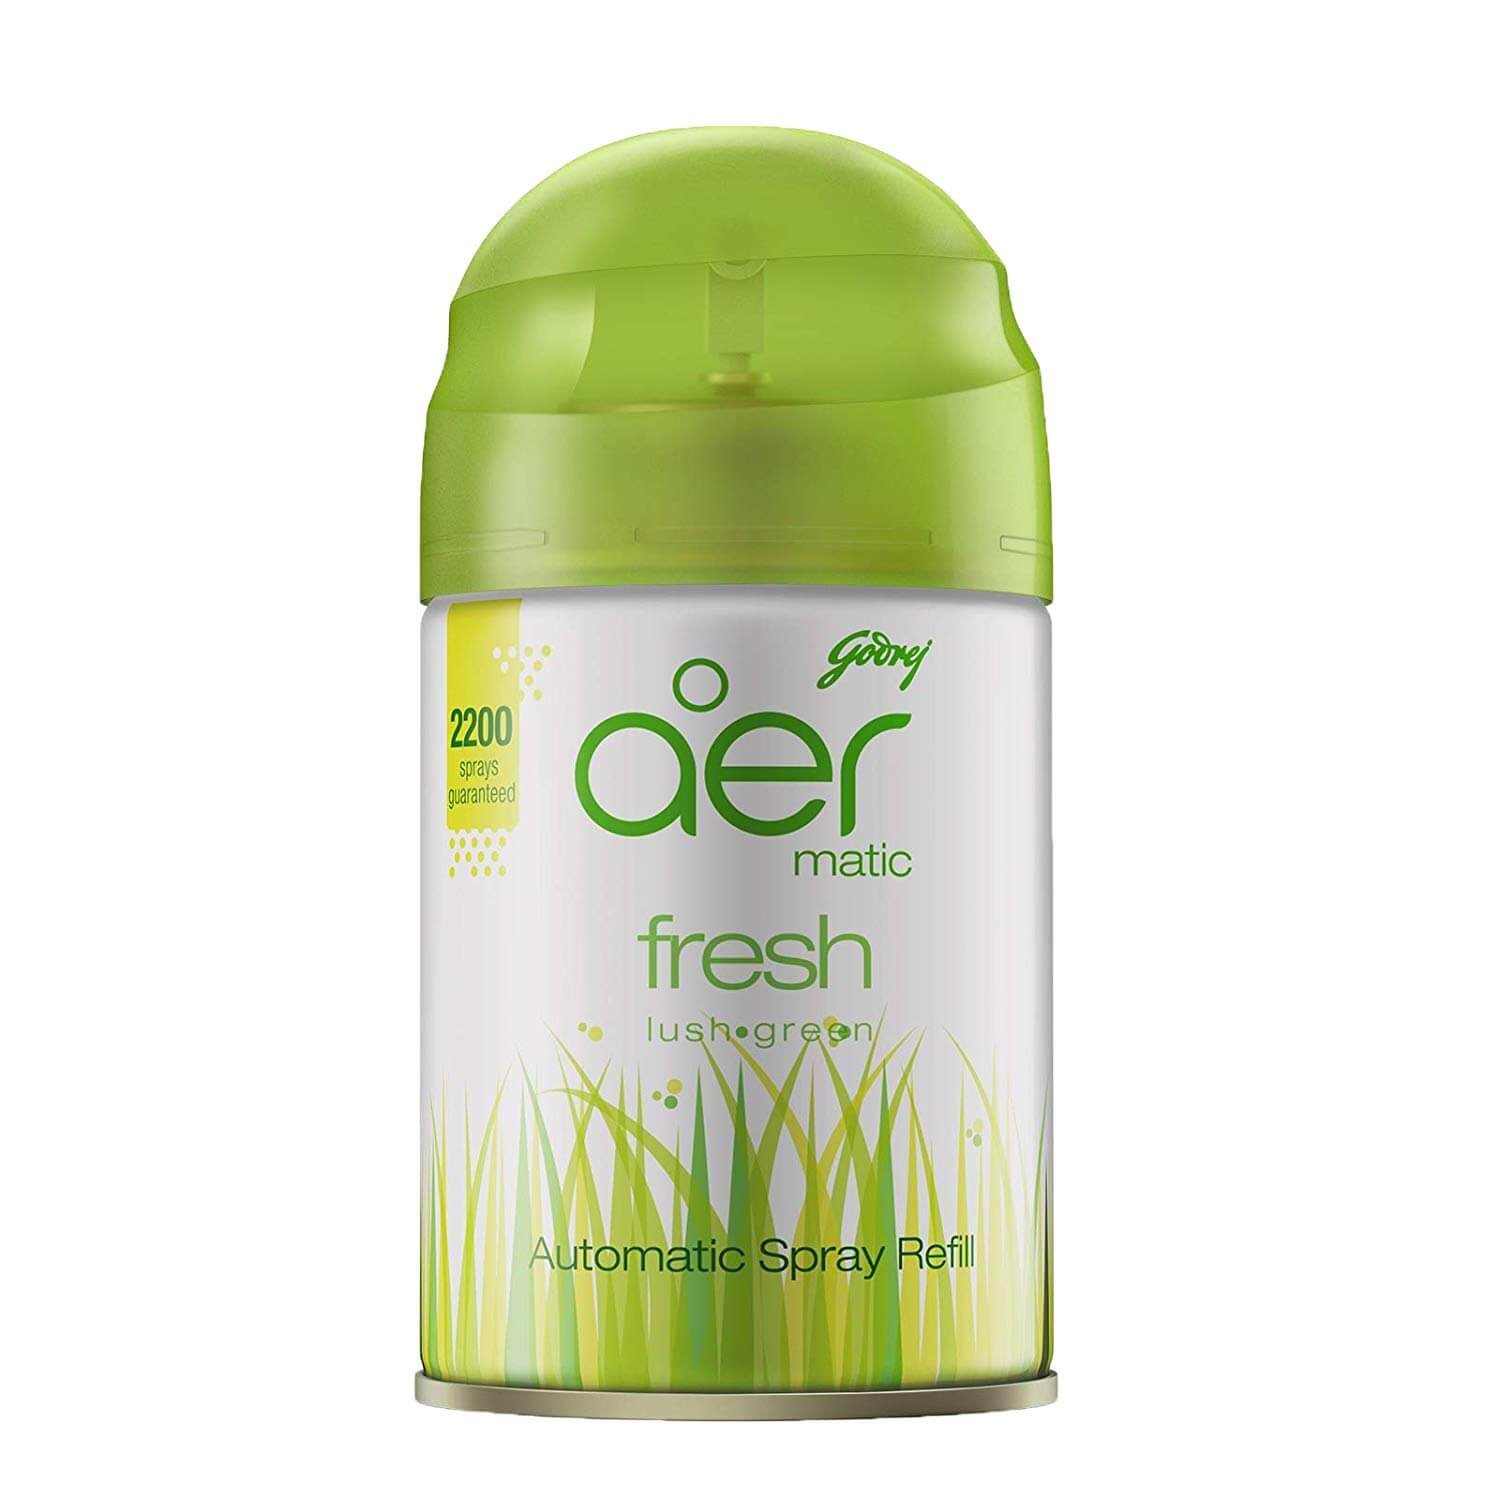 Godrej aer matic, Automatic Air Freshener Refill Pack - Fresh Lush Green (225 ml)